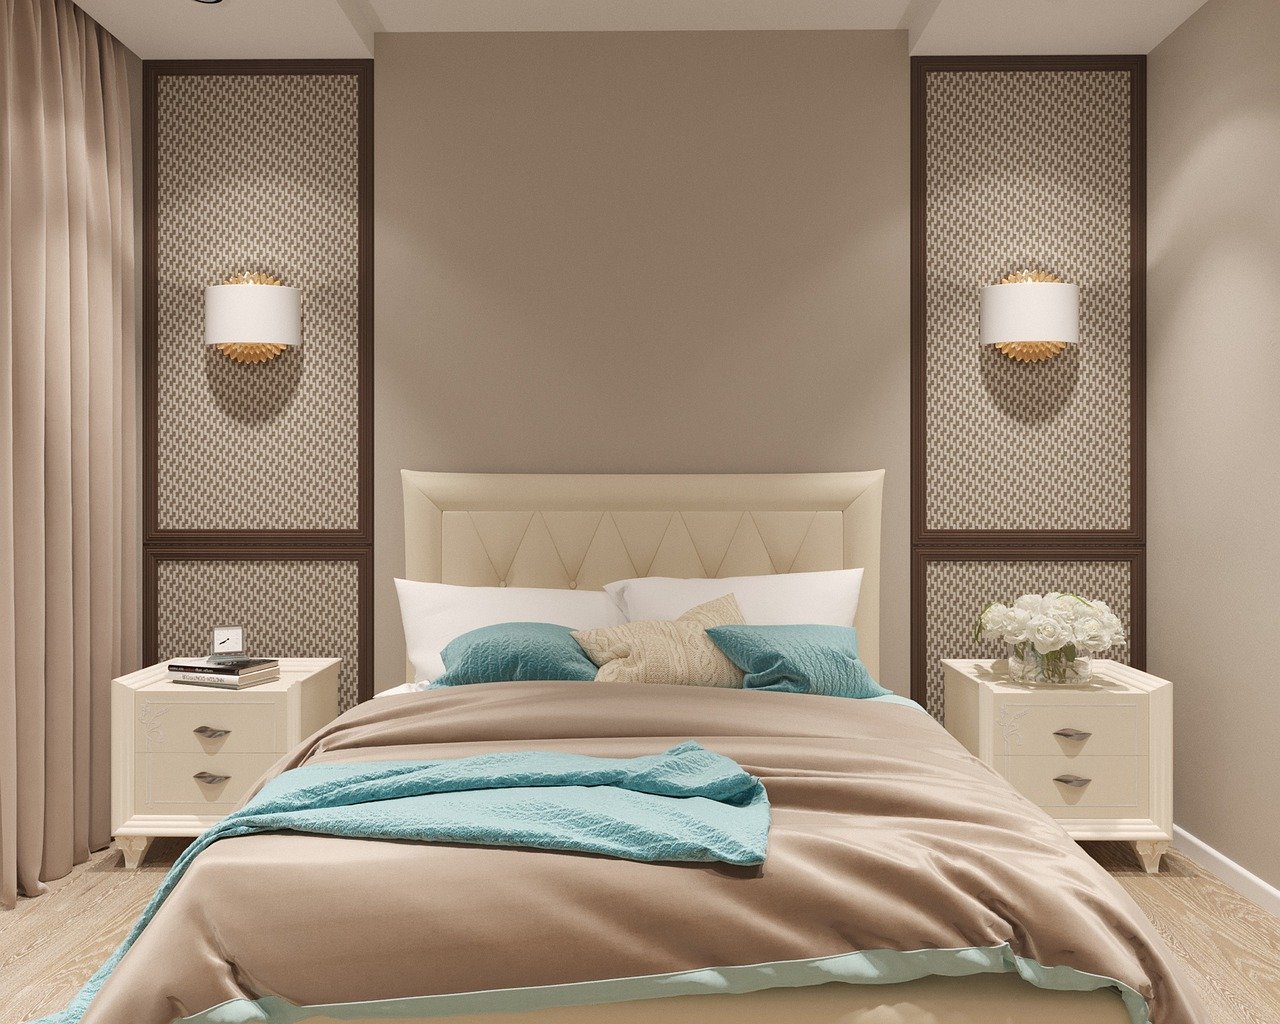 Bedroom pastel colors